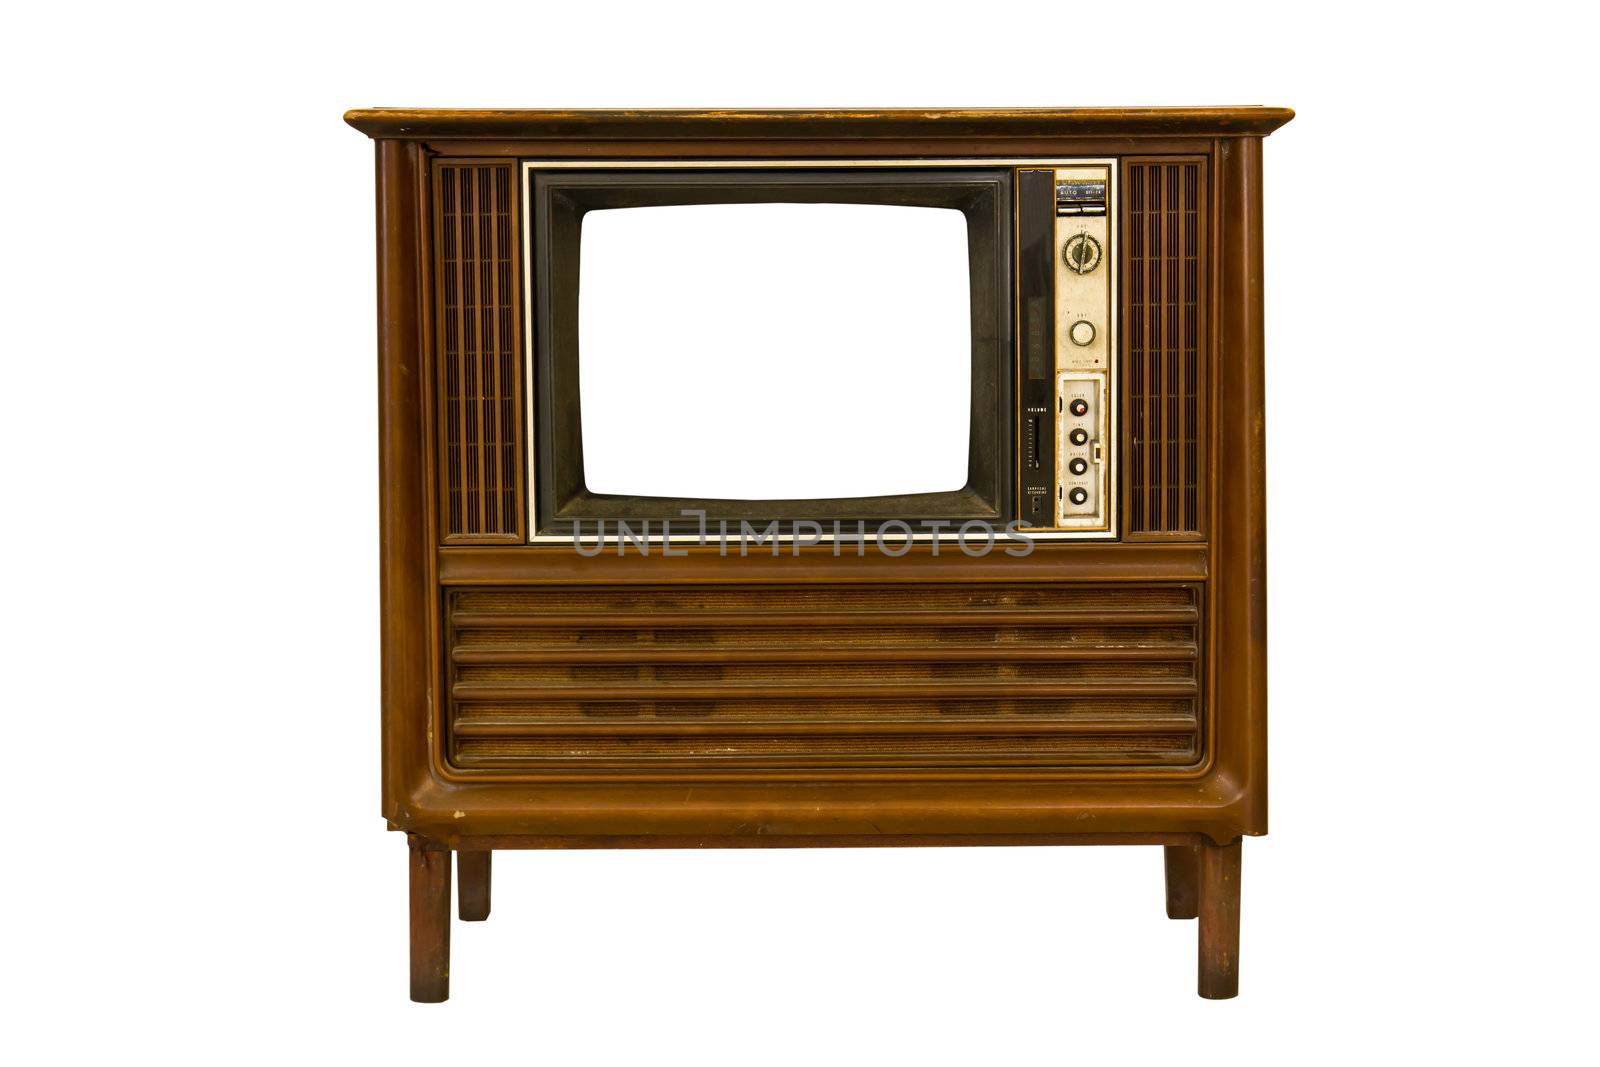 Retro Vintage television by stoonn